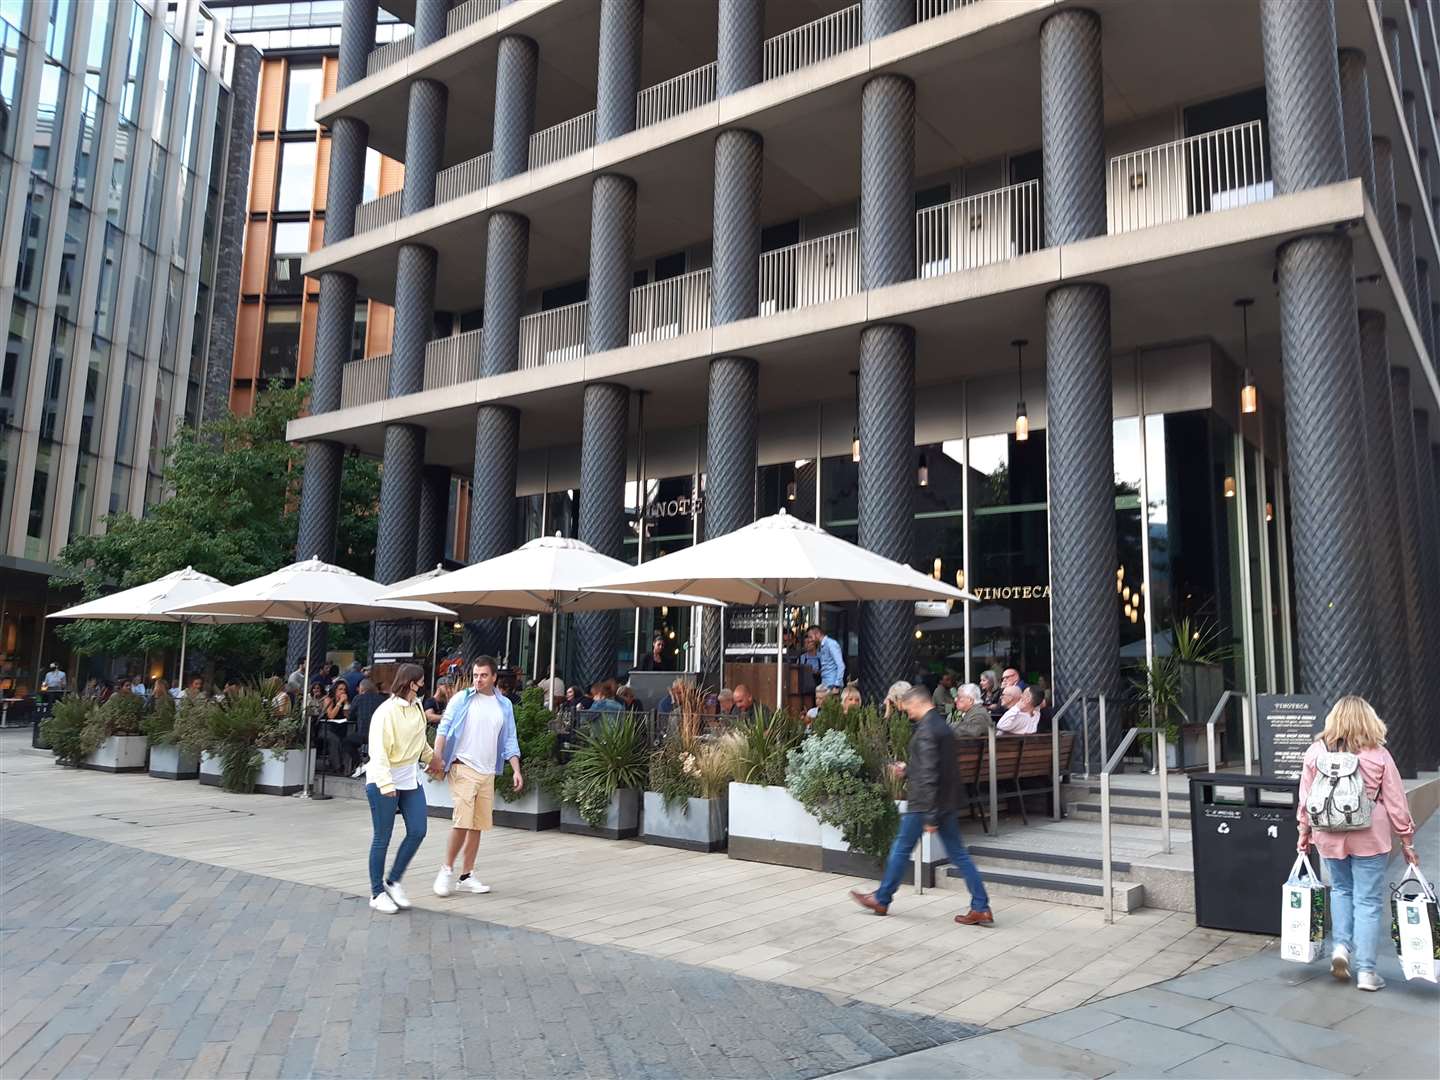 Vinoteca restaurant at Pancras Square